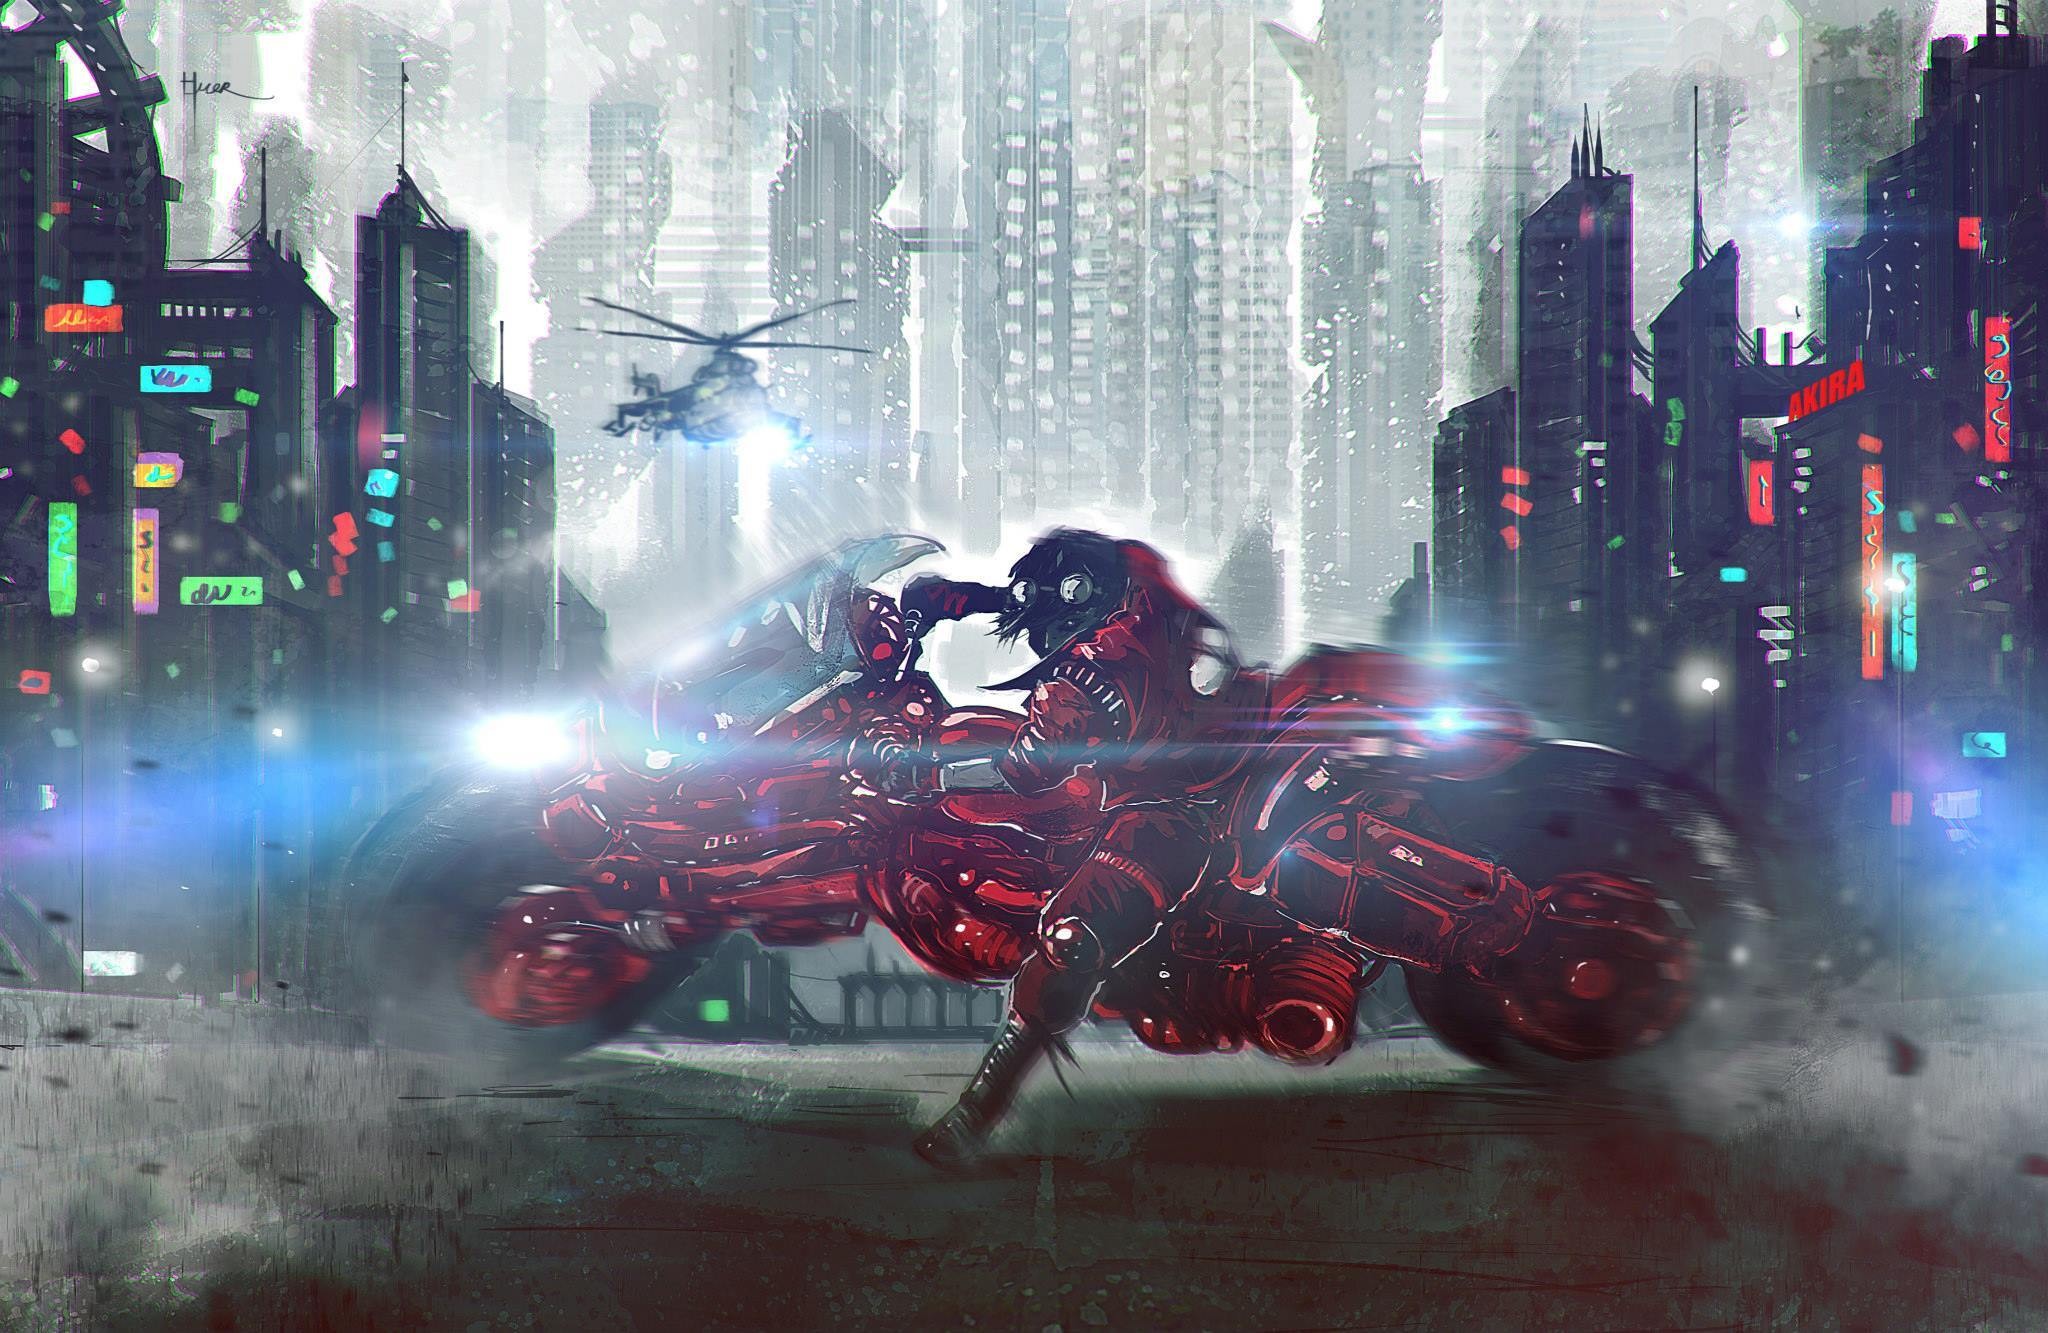 Anime 2048x1333 drawing digital art Akira cyberpunk futuristic kaneda motorcycle vehicle Red Motorcycles futuristic city cityscape artwork science fiction anime